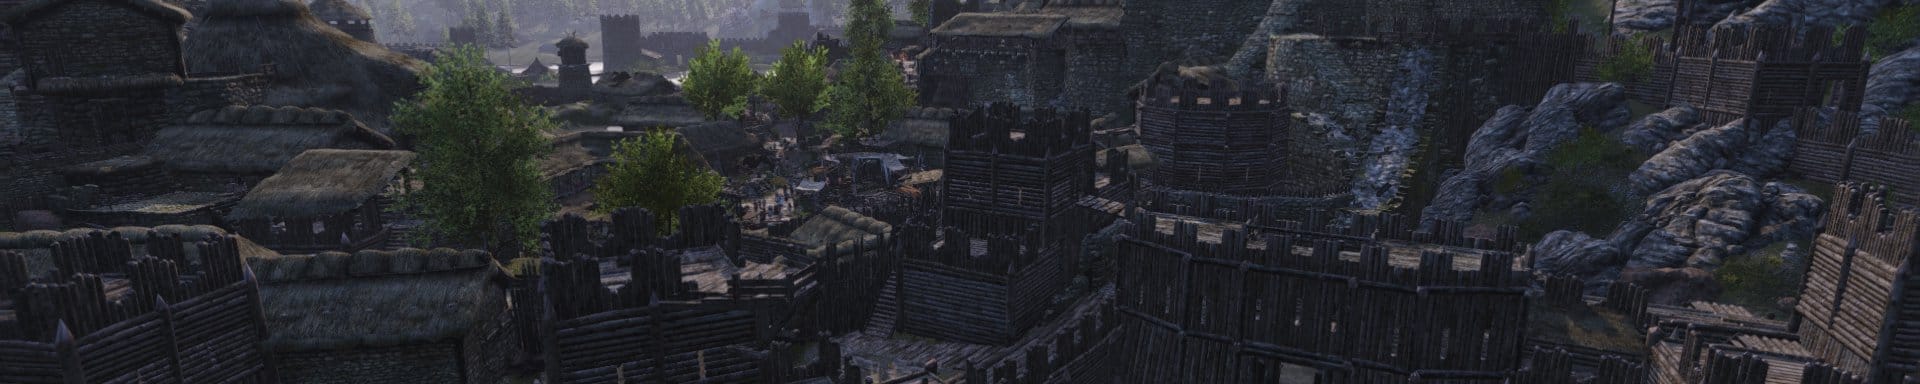 Mount & Blade II: Bannerlord Castle